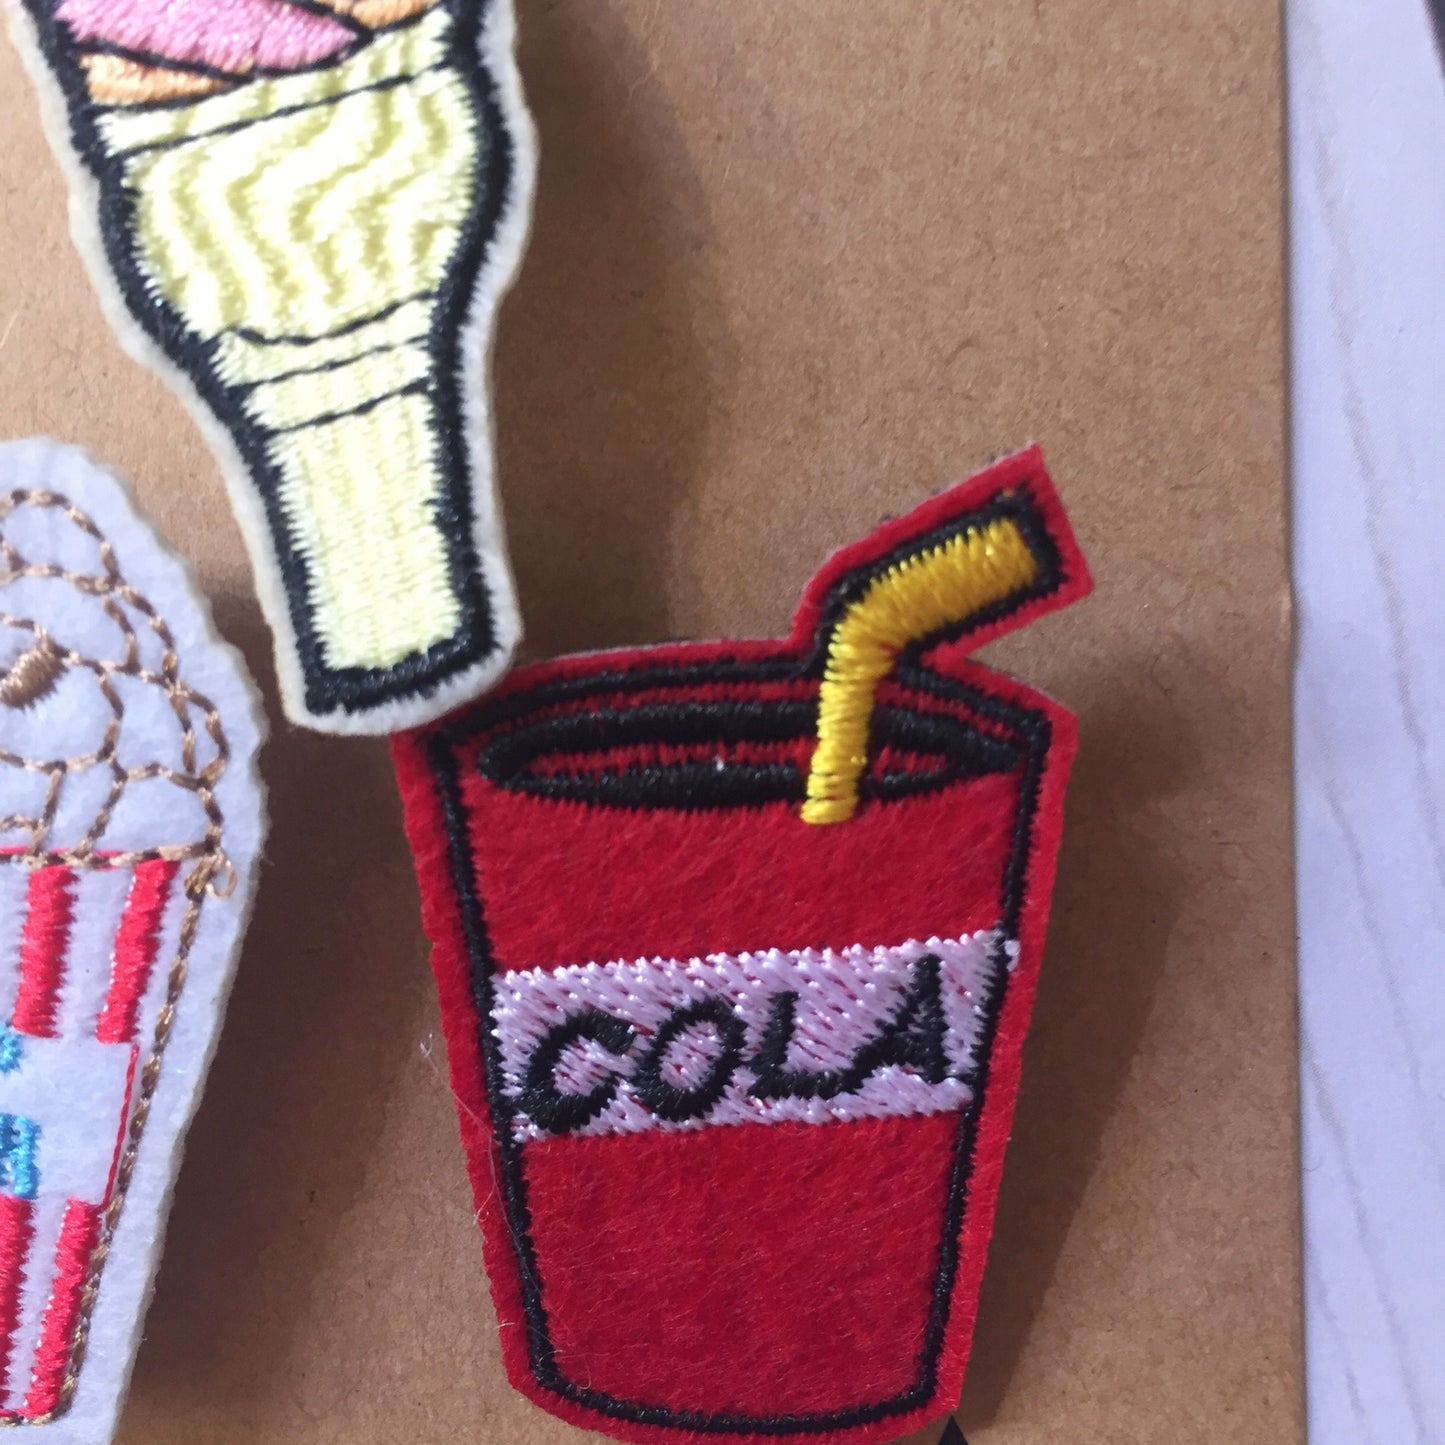 Flair Pins :: Ice Cream, Pop Corn, Soda Pop